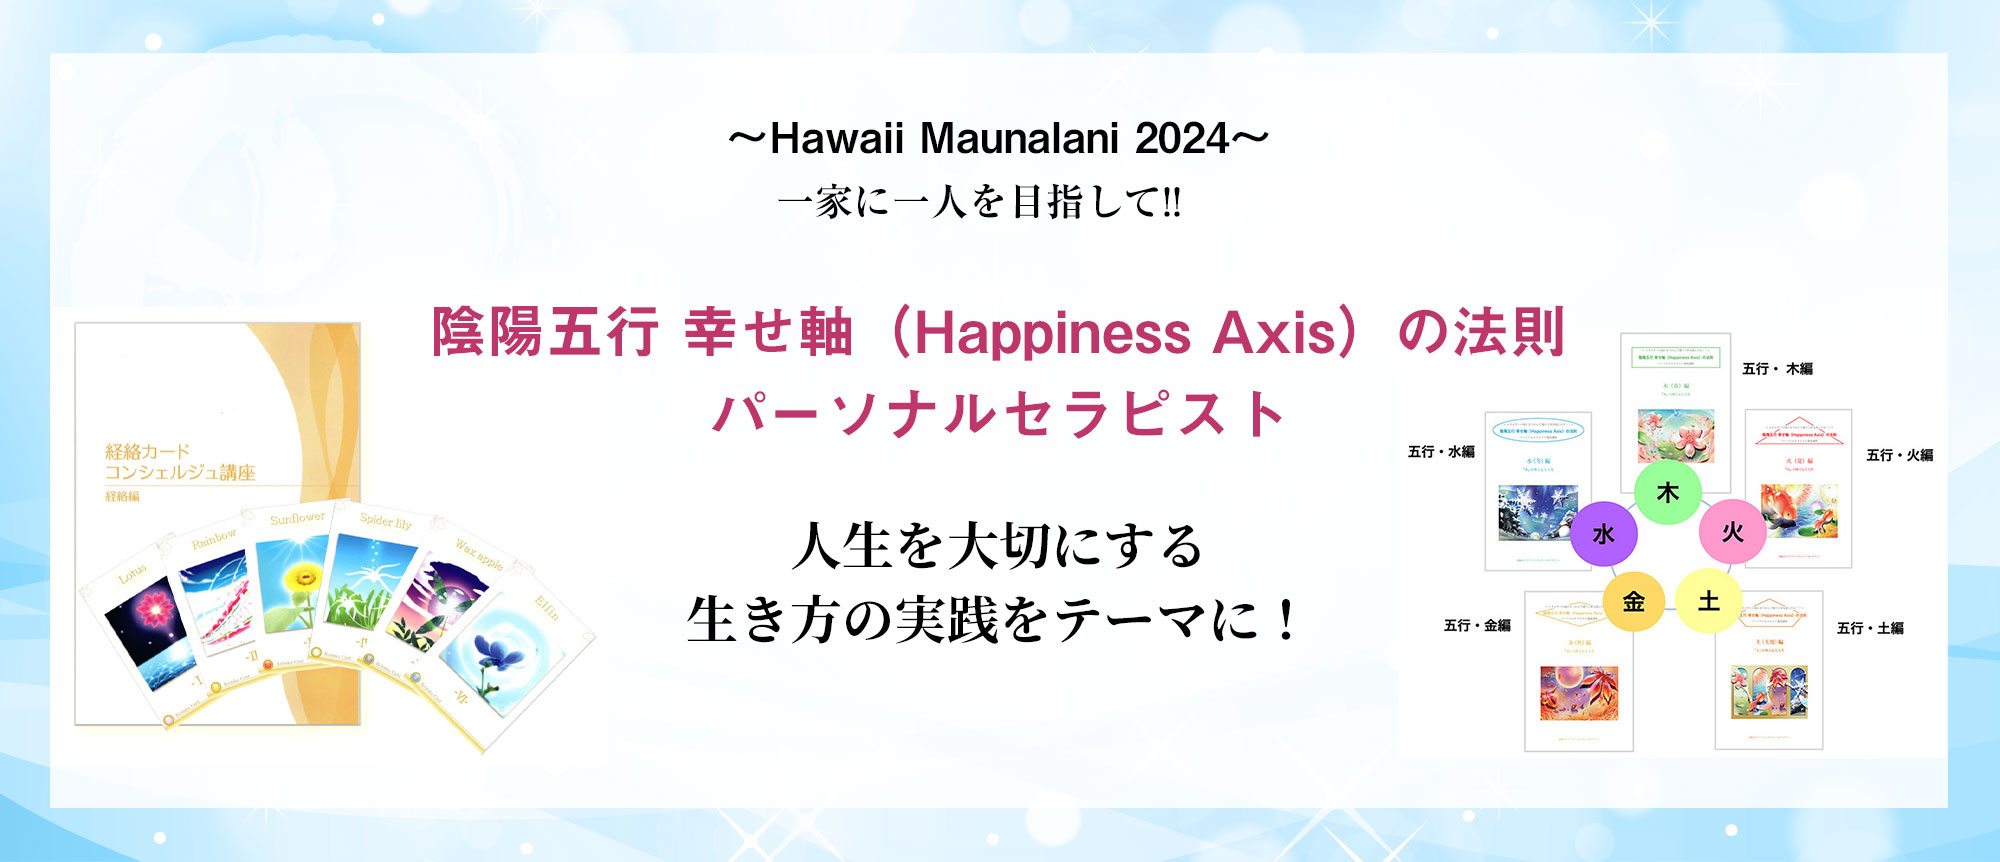 Hawaii Maunalani 2024 一家に一人を目指して!! 陰陽五行 幸せ軸(Happiness Axis)の法則 パーソナルセラピスト 人生を大切にする生き方の実践をテーマに!